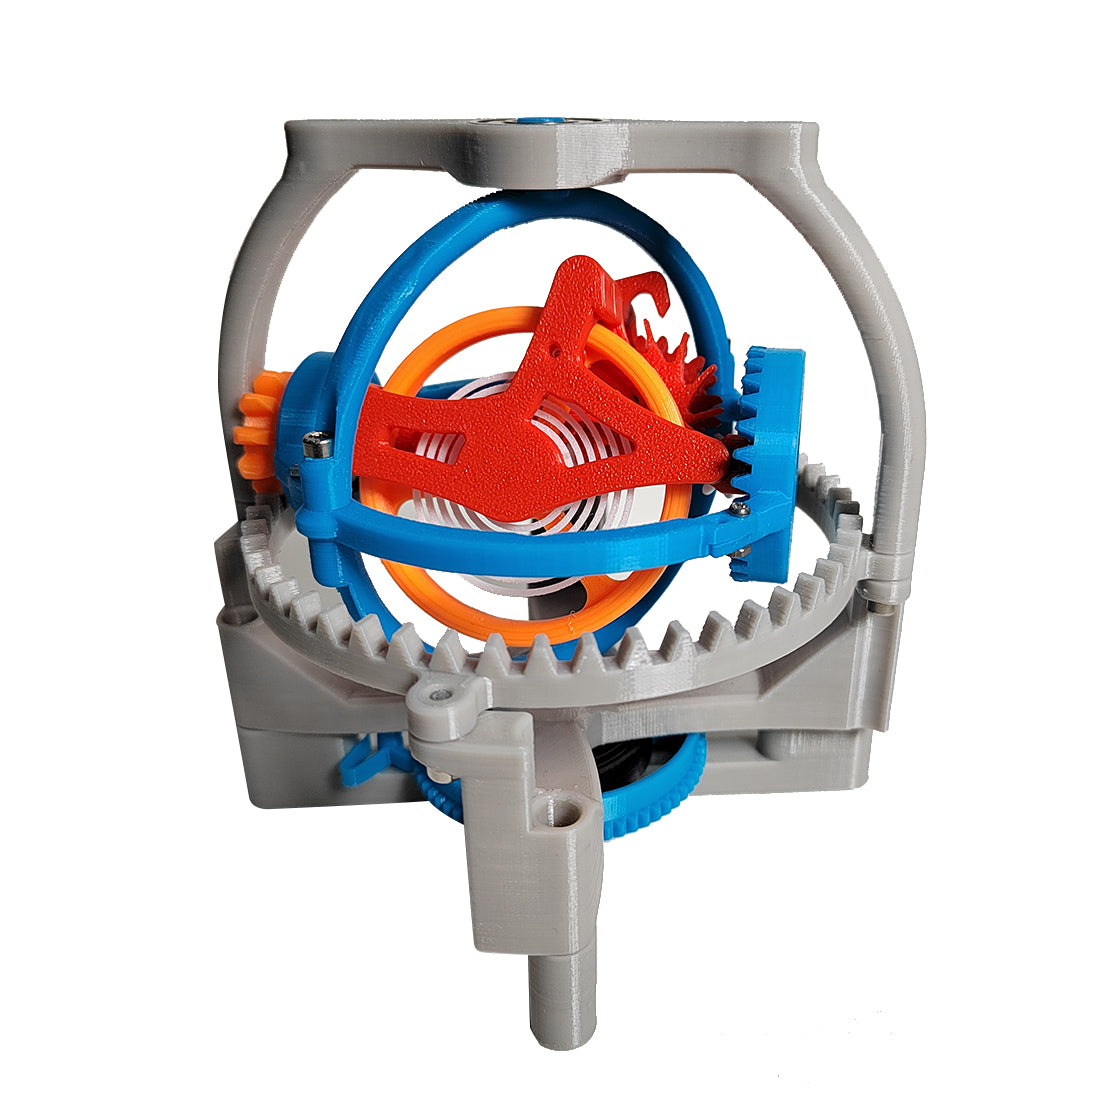 Mechanical Triple-Axis Tourbillon 3D Printed Toy